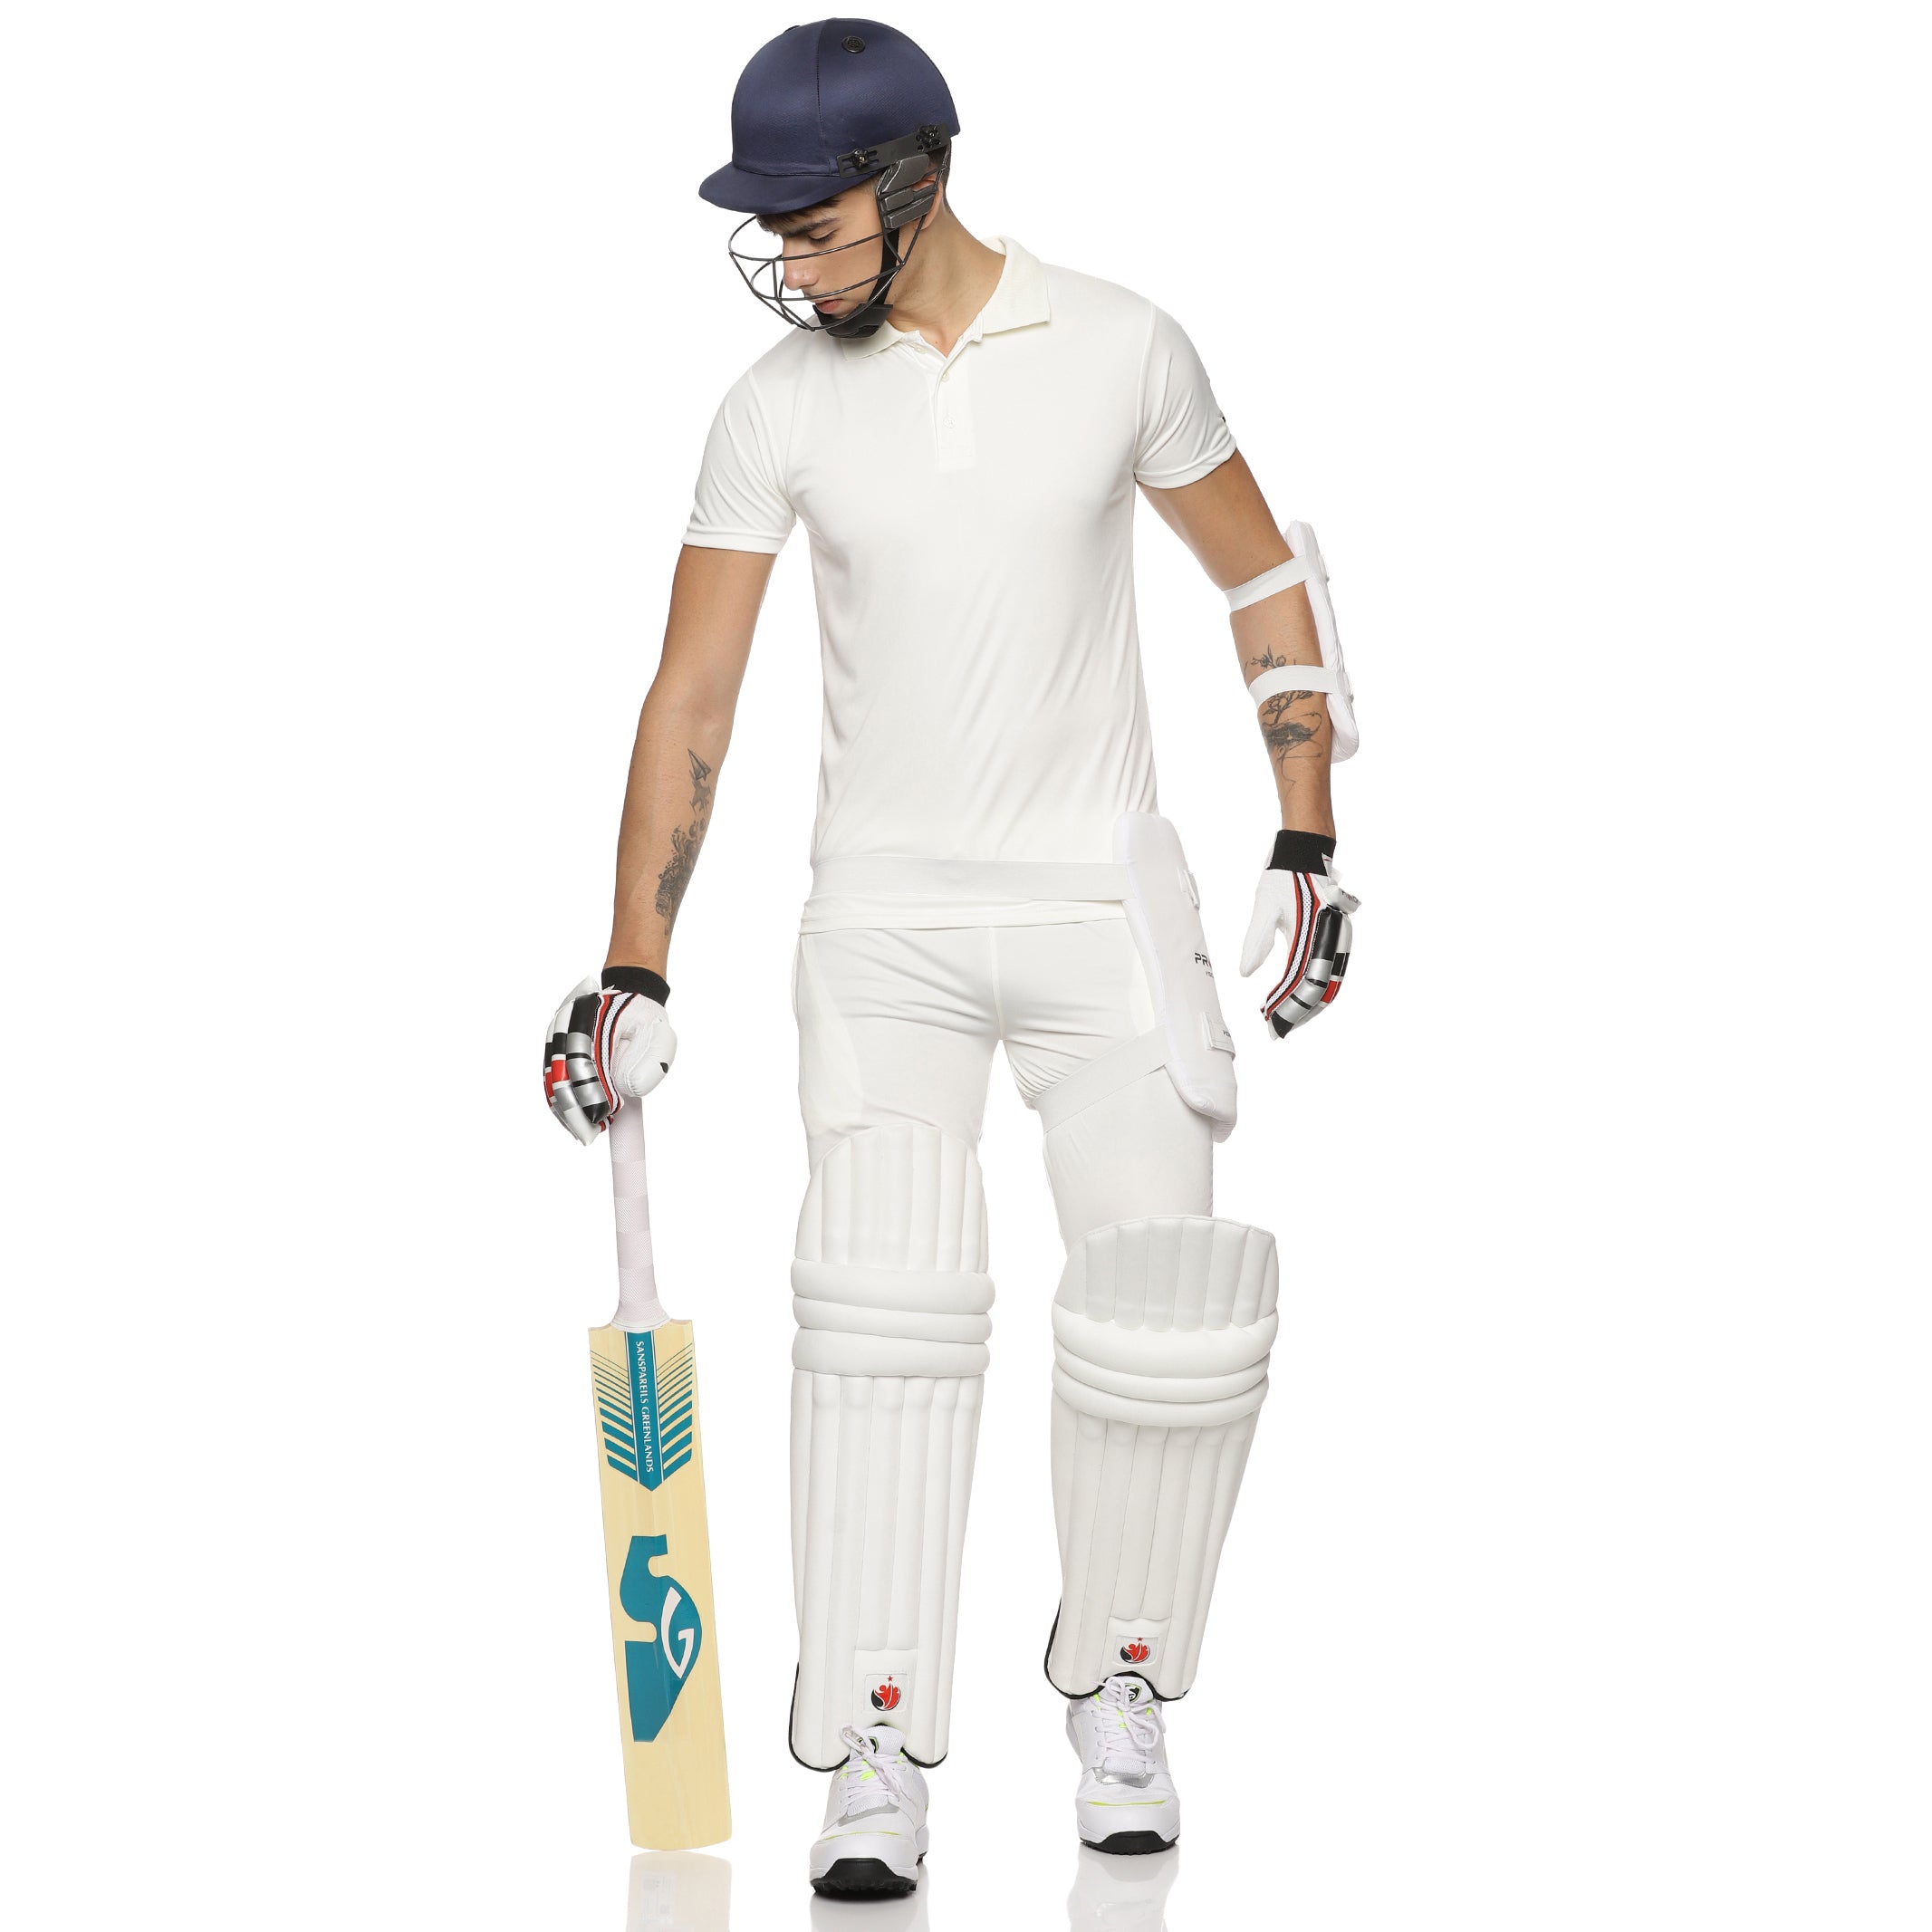 Cricket Club kit | Uniform shirts, Cricket uniform, Shirts manufacturers